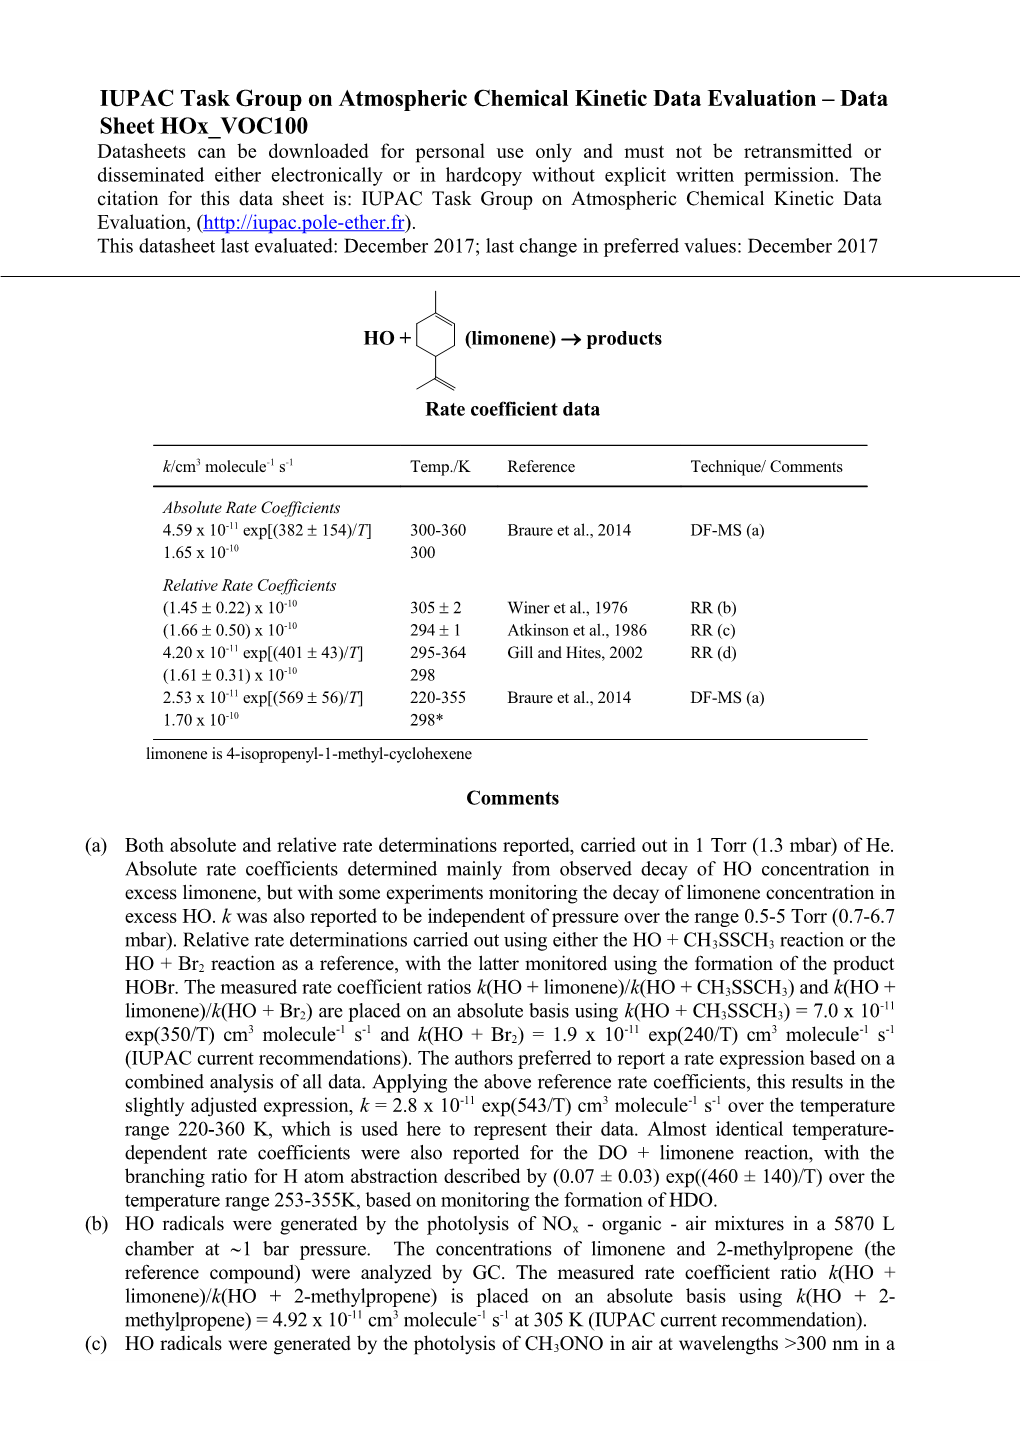 IUPAC Task Group on Atmospheric Chemical Kinetic Data Evaluation Data Sheet Hox VOC9